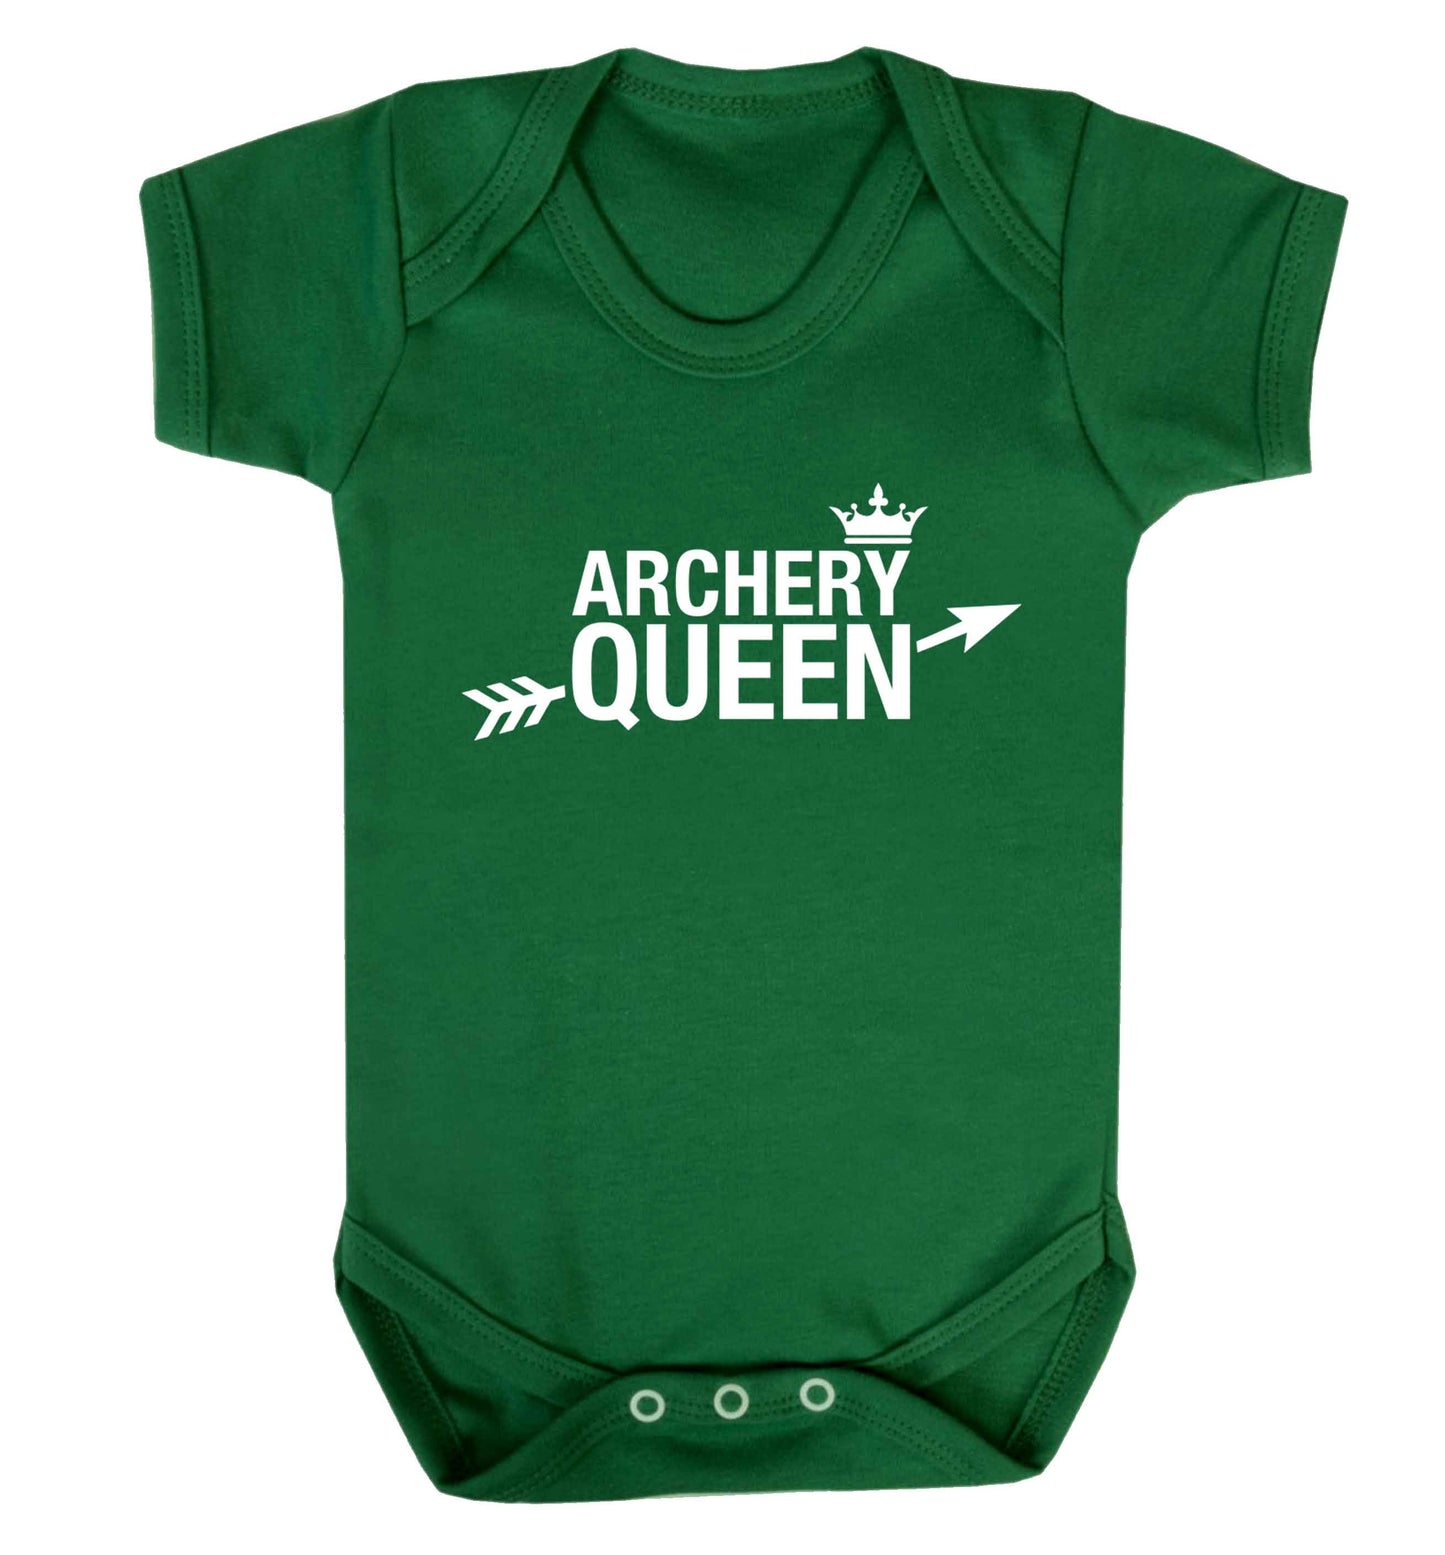 Archery queen Baby Vest green 18-24 months